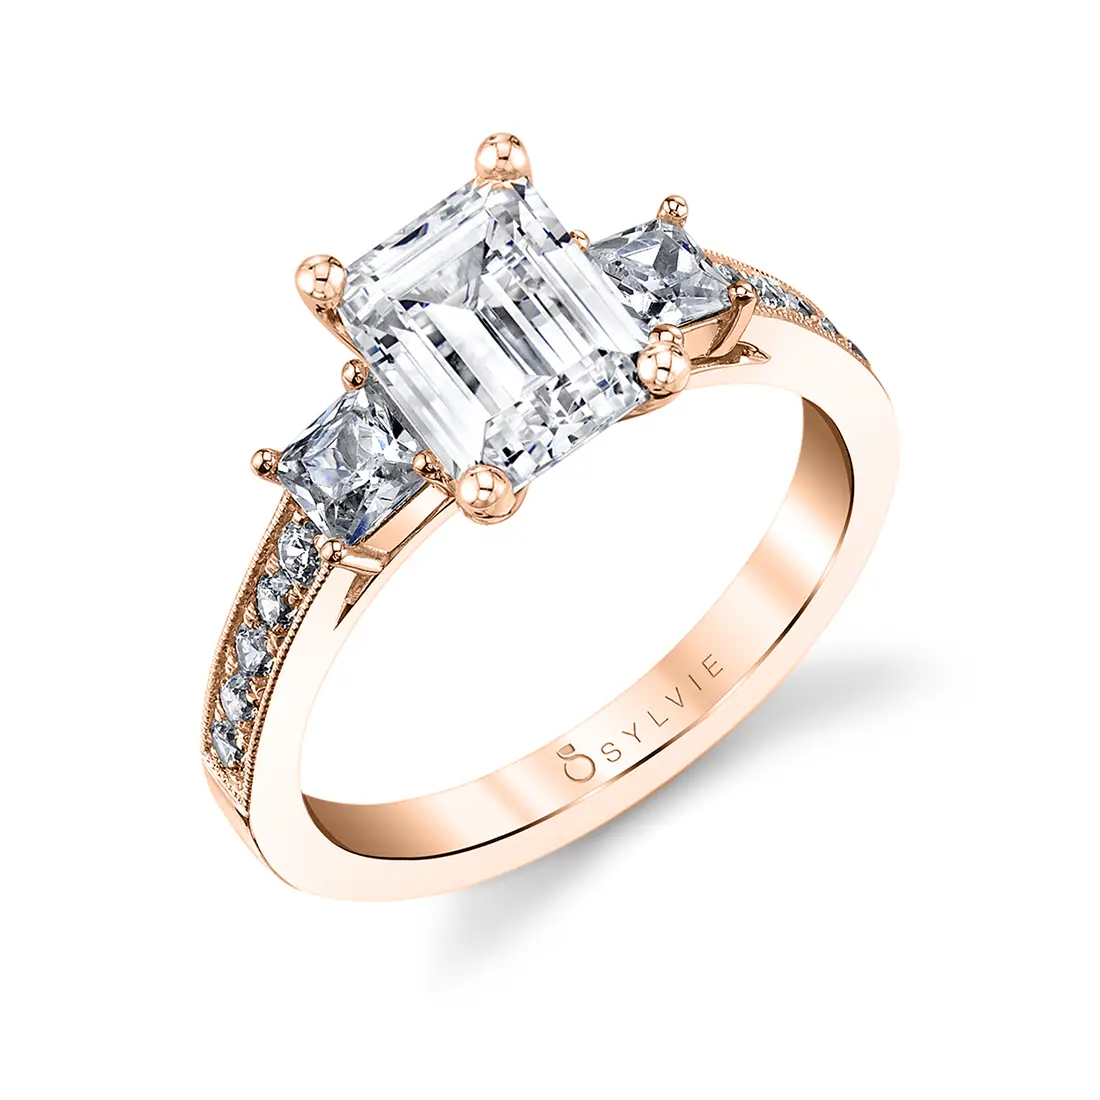 Emerald cut 3 stone engagement ring